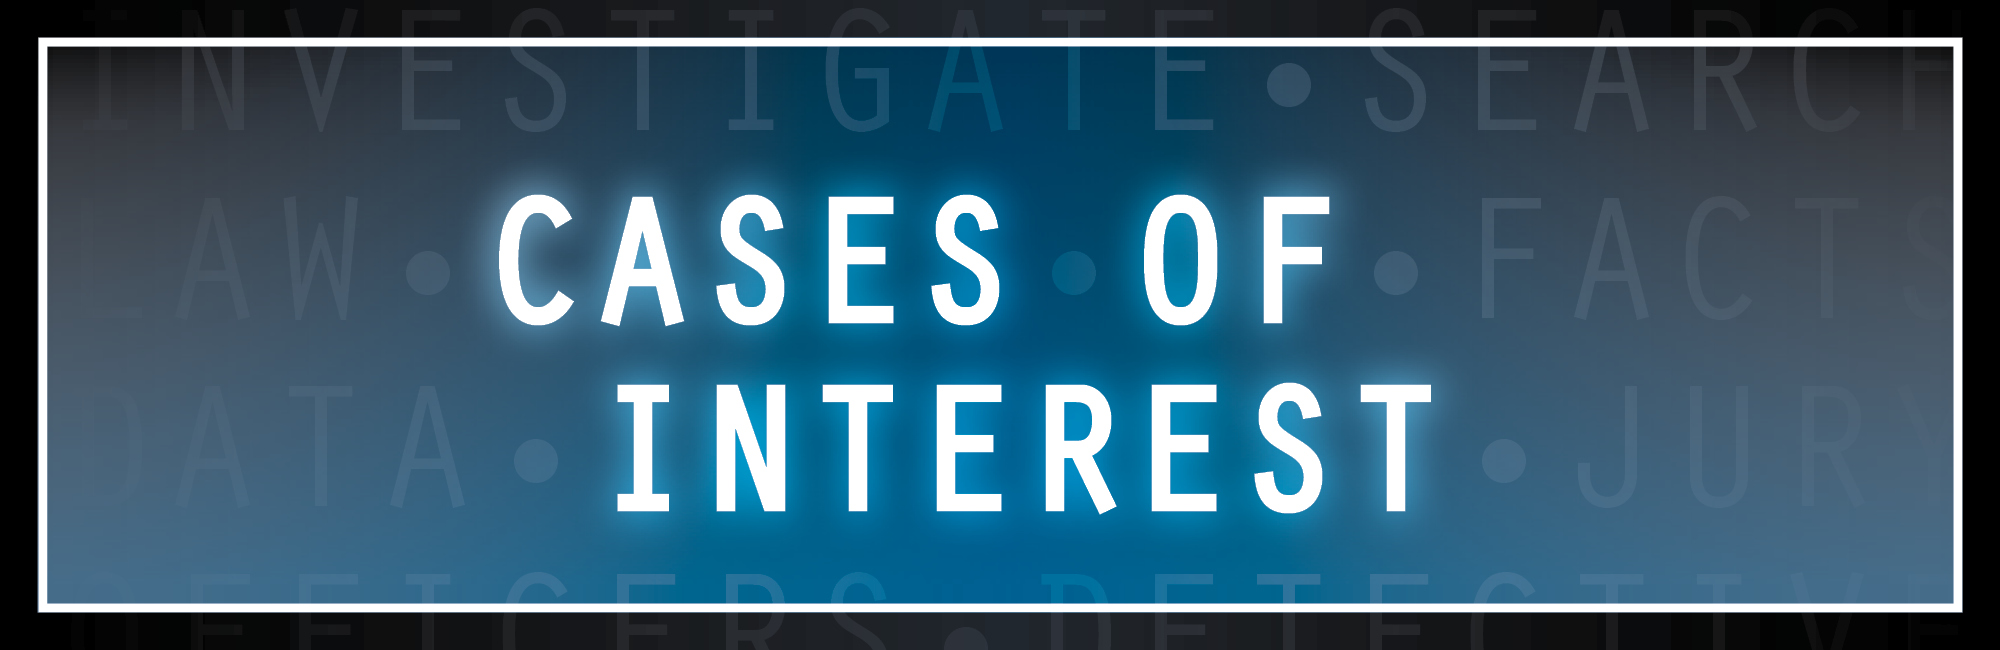 Case Of Interest Website Header